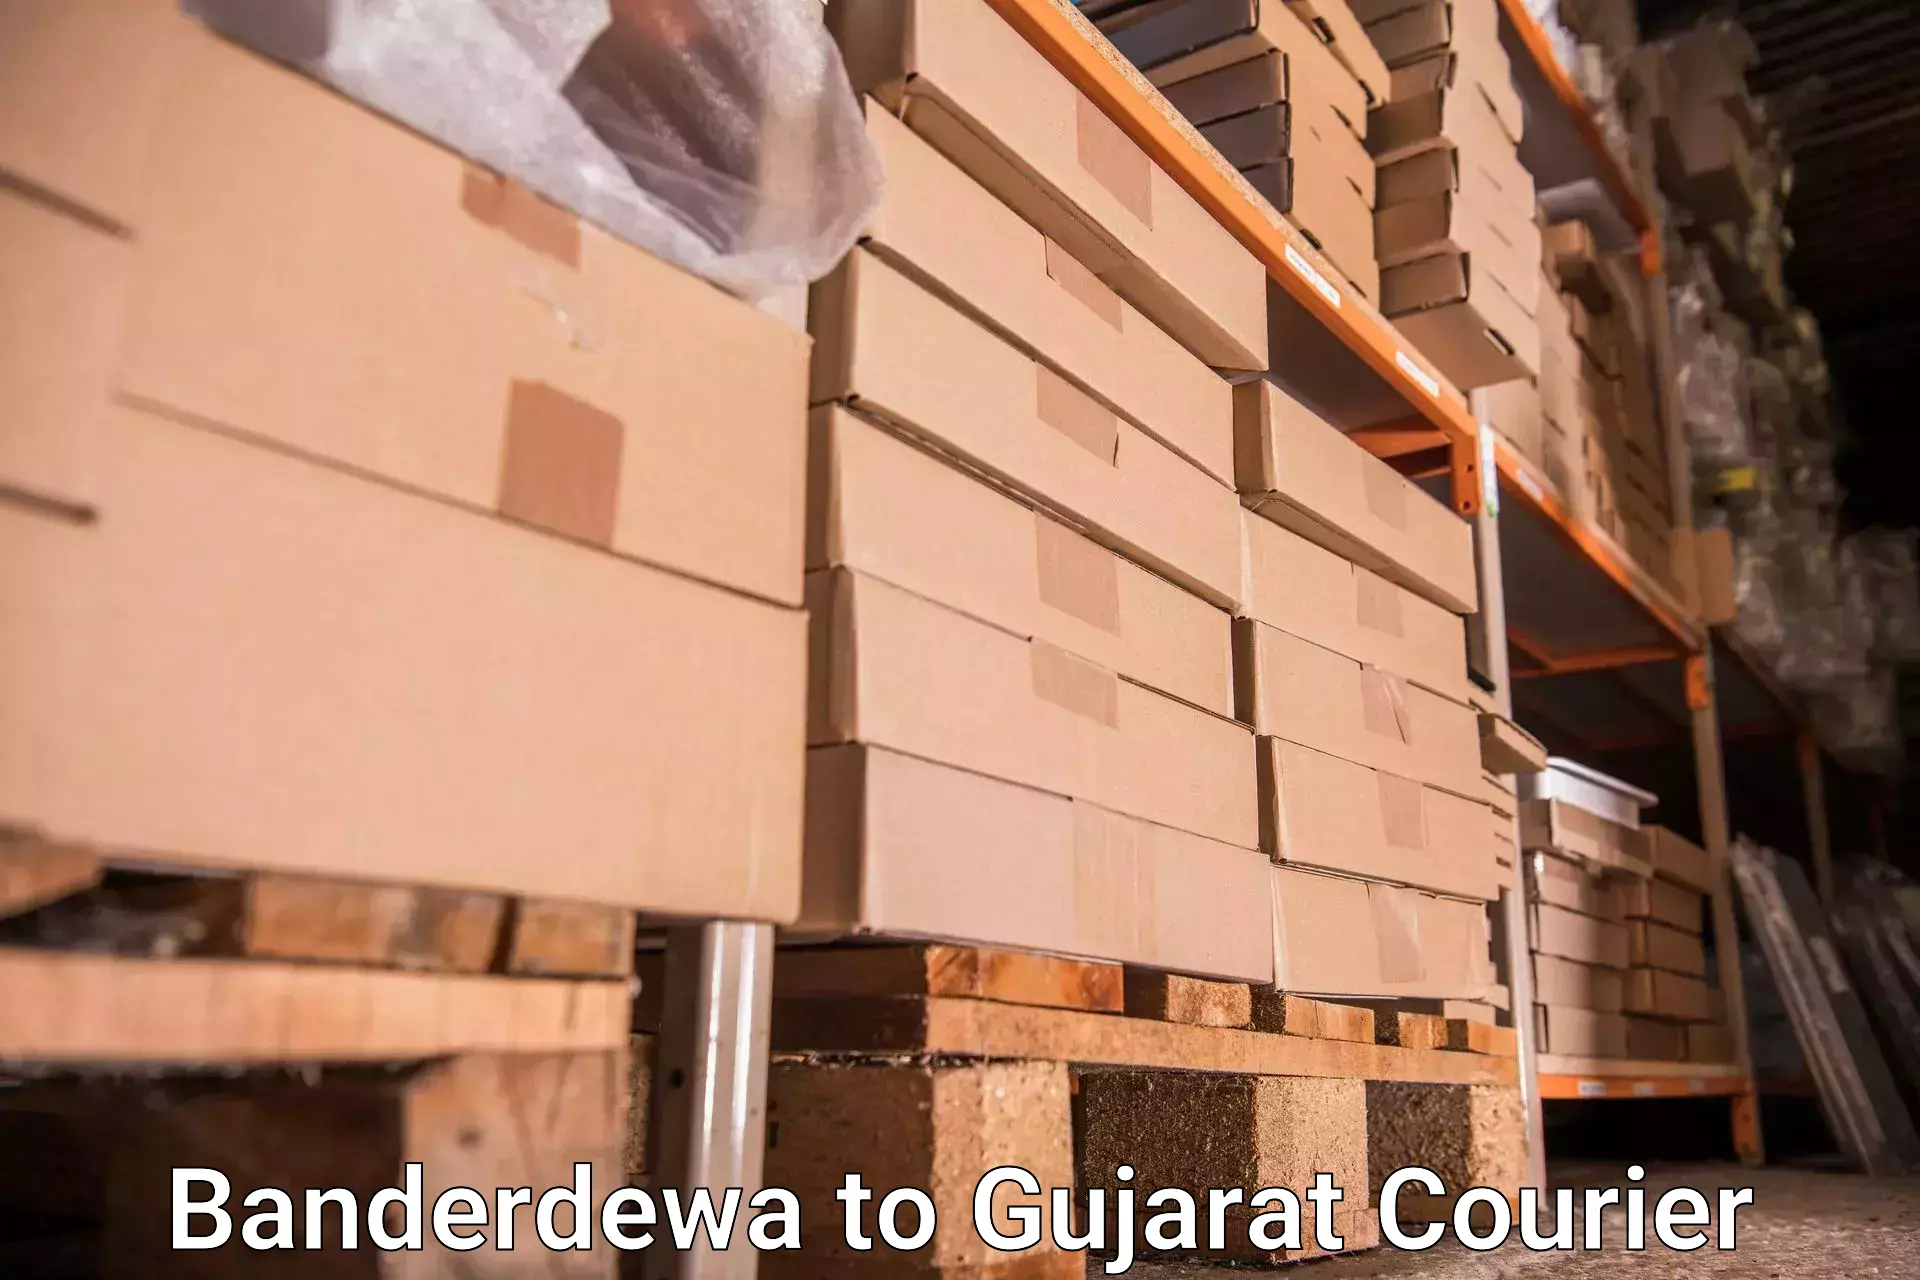 Baggage delivery scheduling Banderdewa to Gujarat